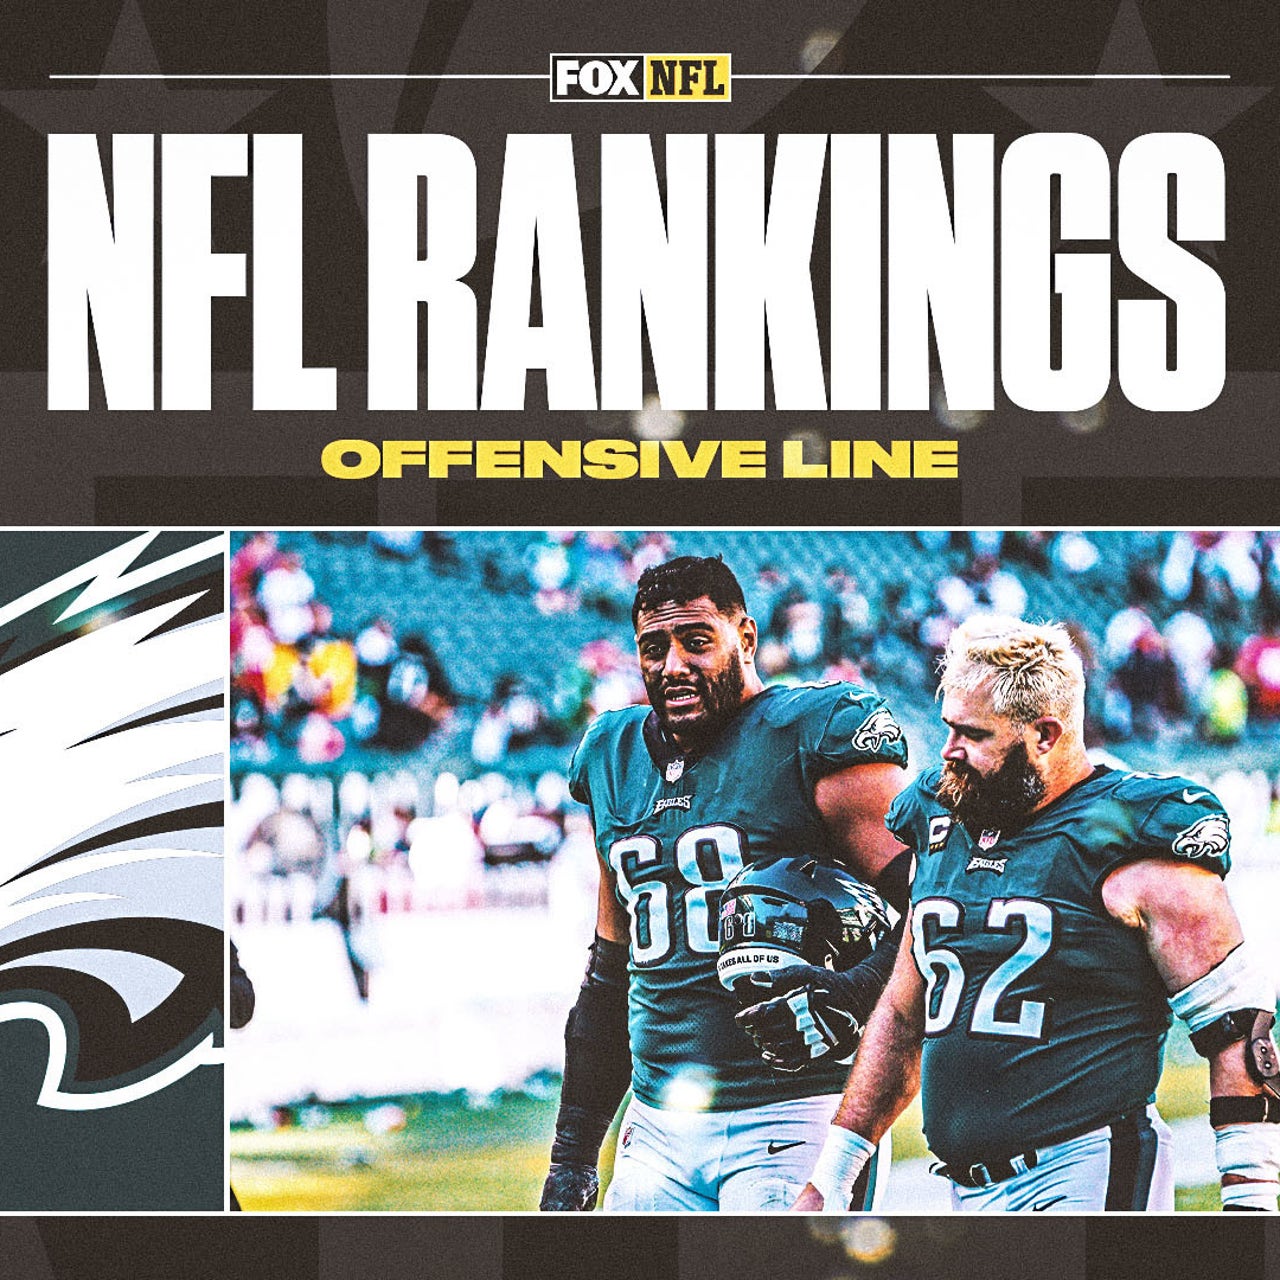 ACC Offensive Line Rankings, through eight weeks, NFL Draft